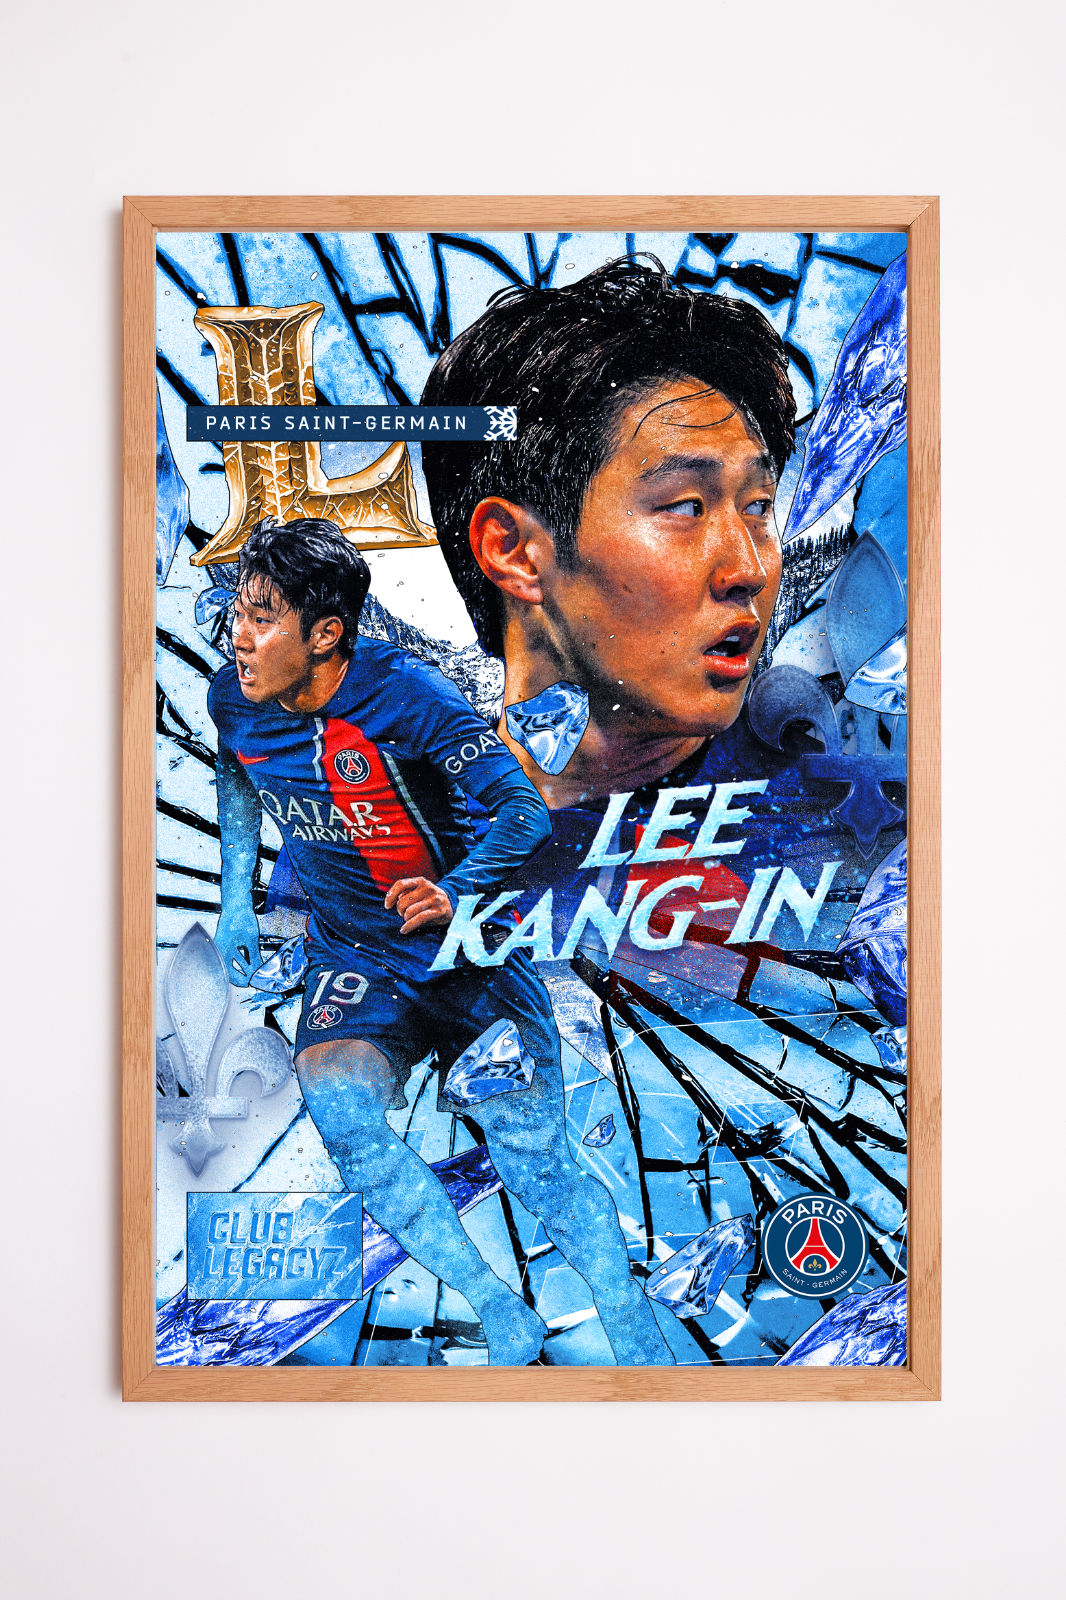 Paris Saint-Germain - Lee Kang-in Frozen Poster limited to 100